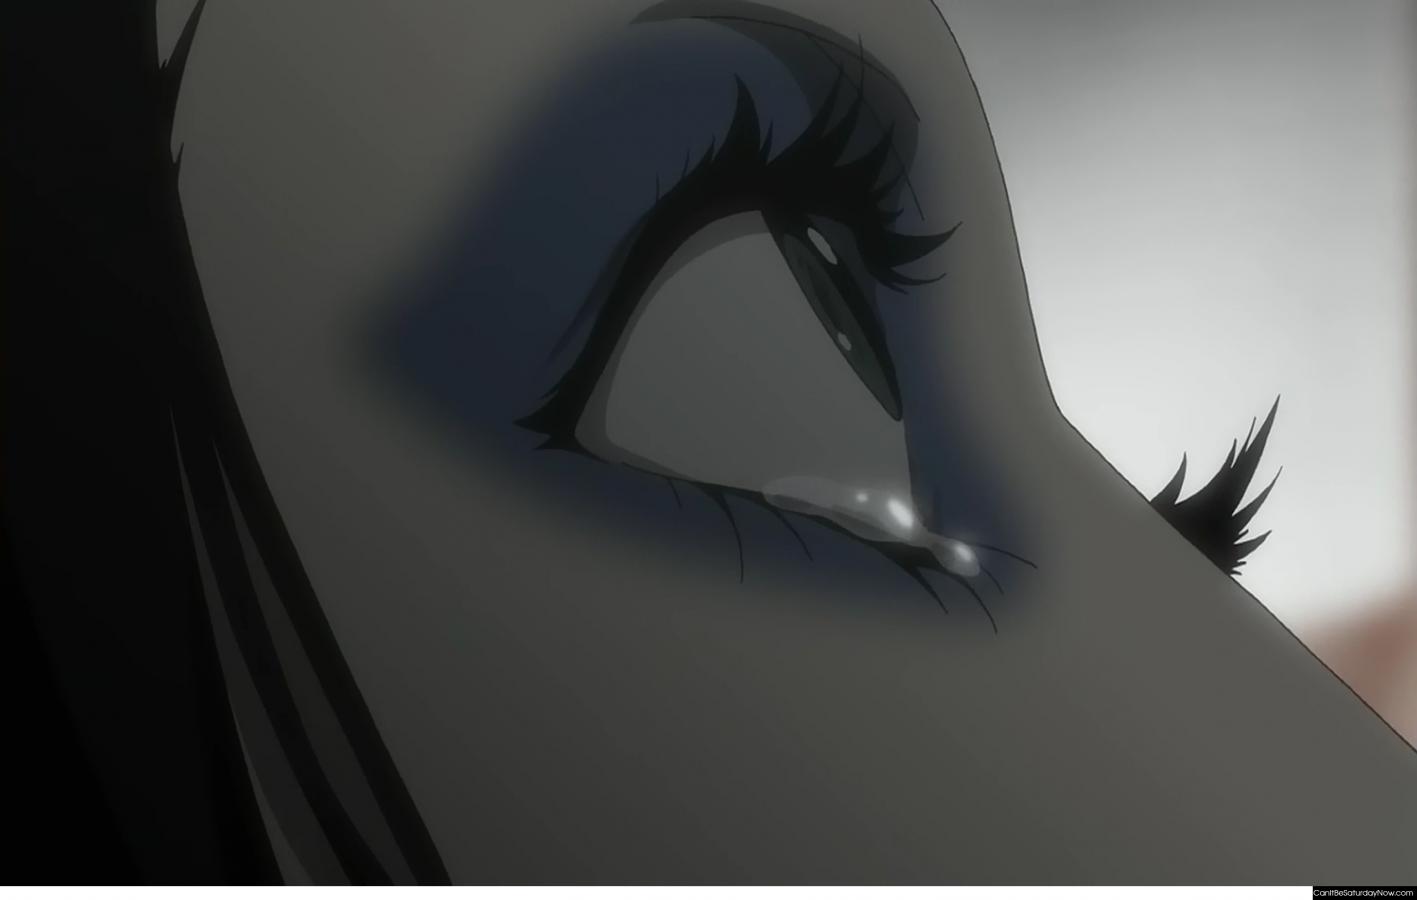 Anime eye - Close up of an Anime eye